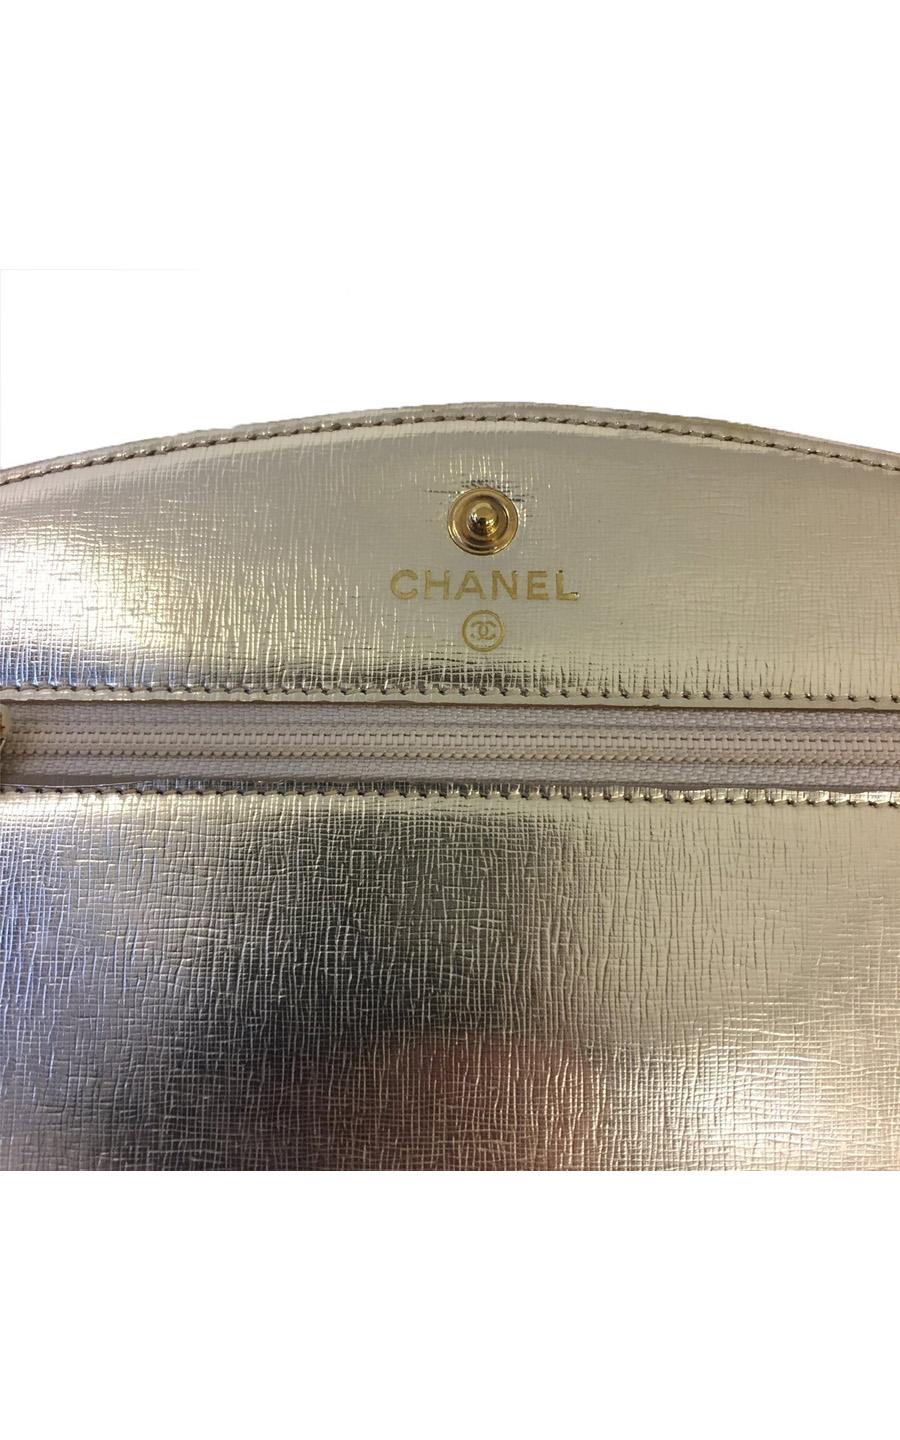 chanel metallic wallet on chain